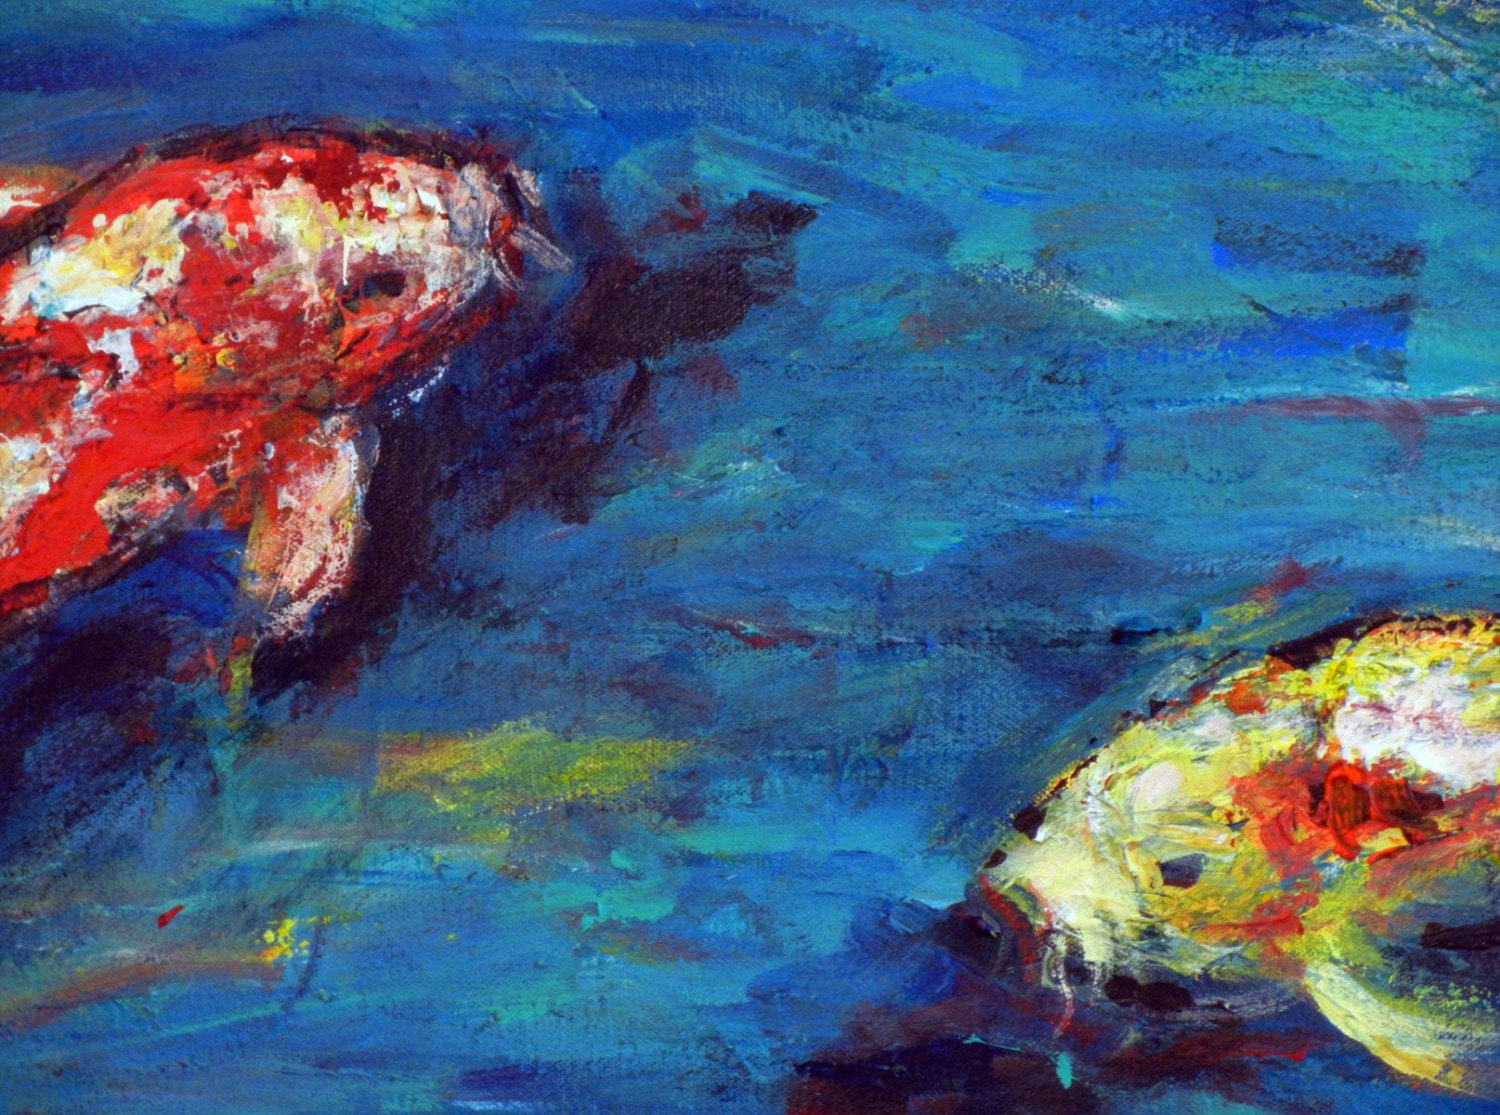 KOI Fish Painting LARGE Colorful Painting Koi Art 24x18